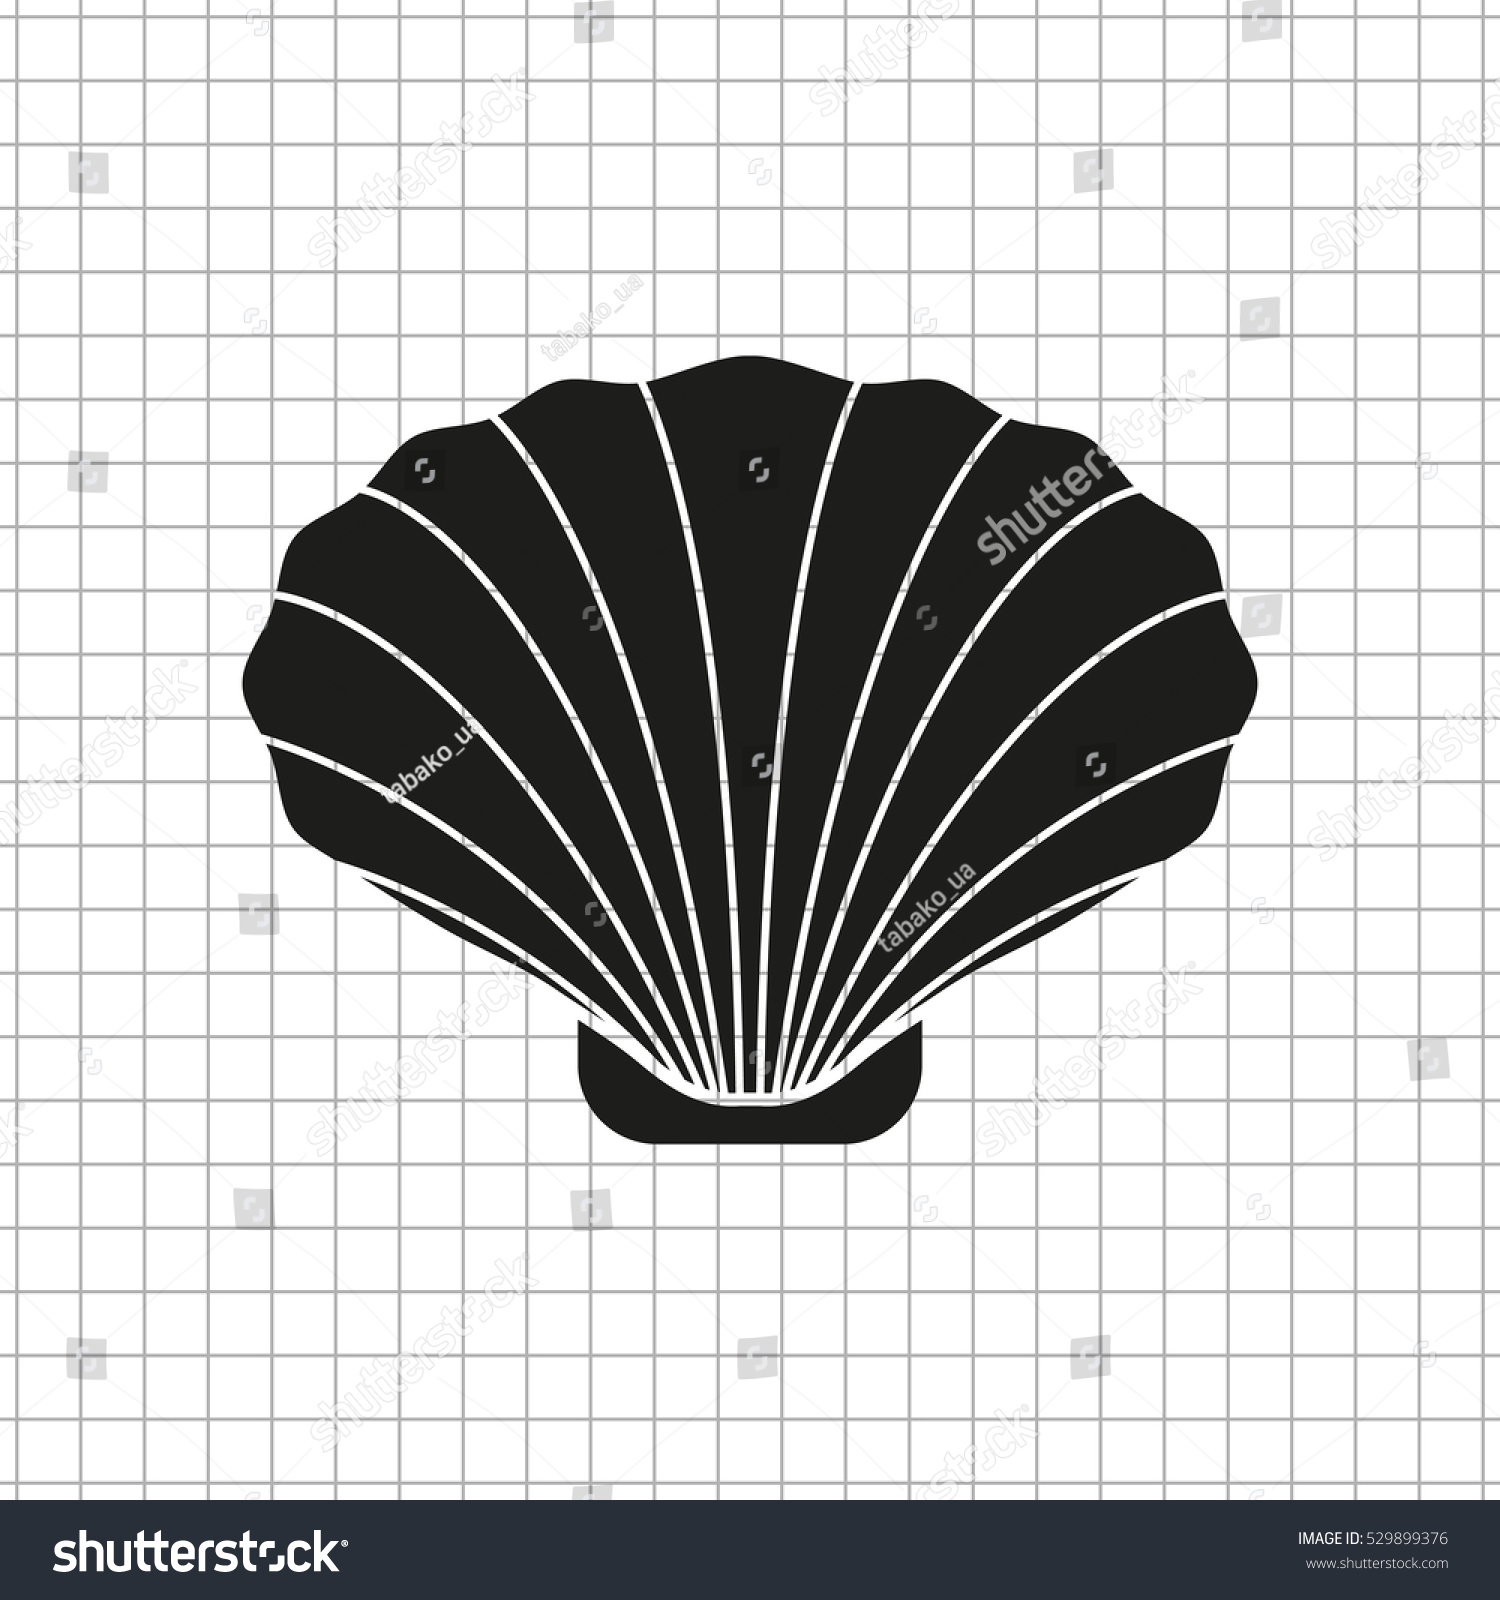 Shell - Black Vector Icon - 529899376 : Shutterstock